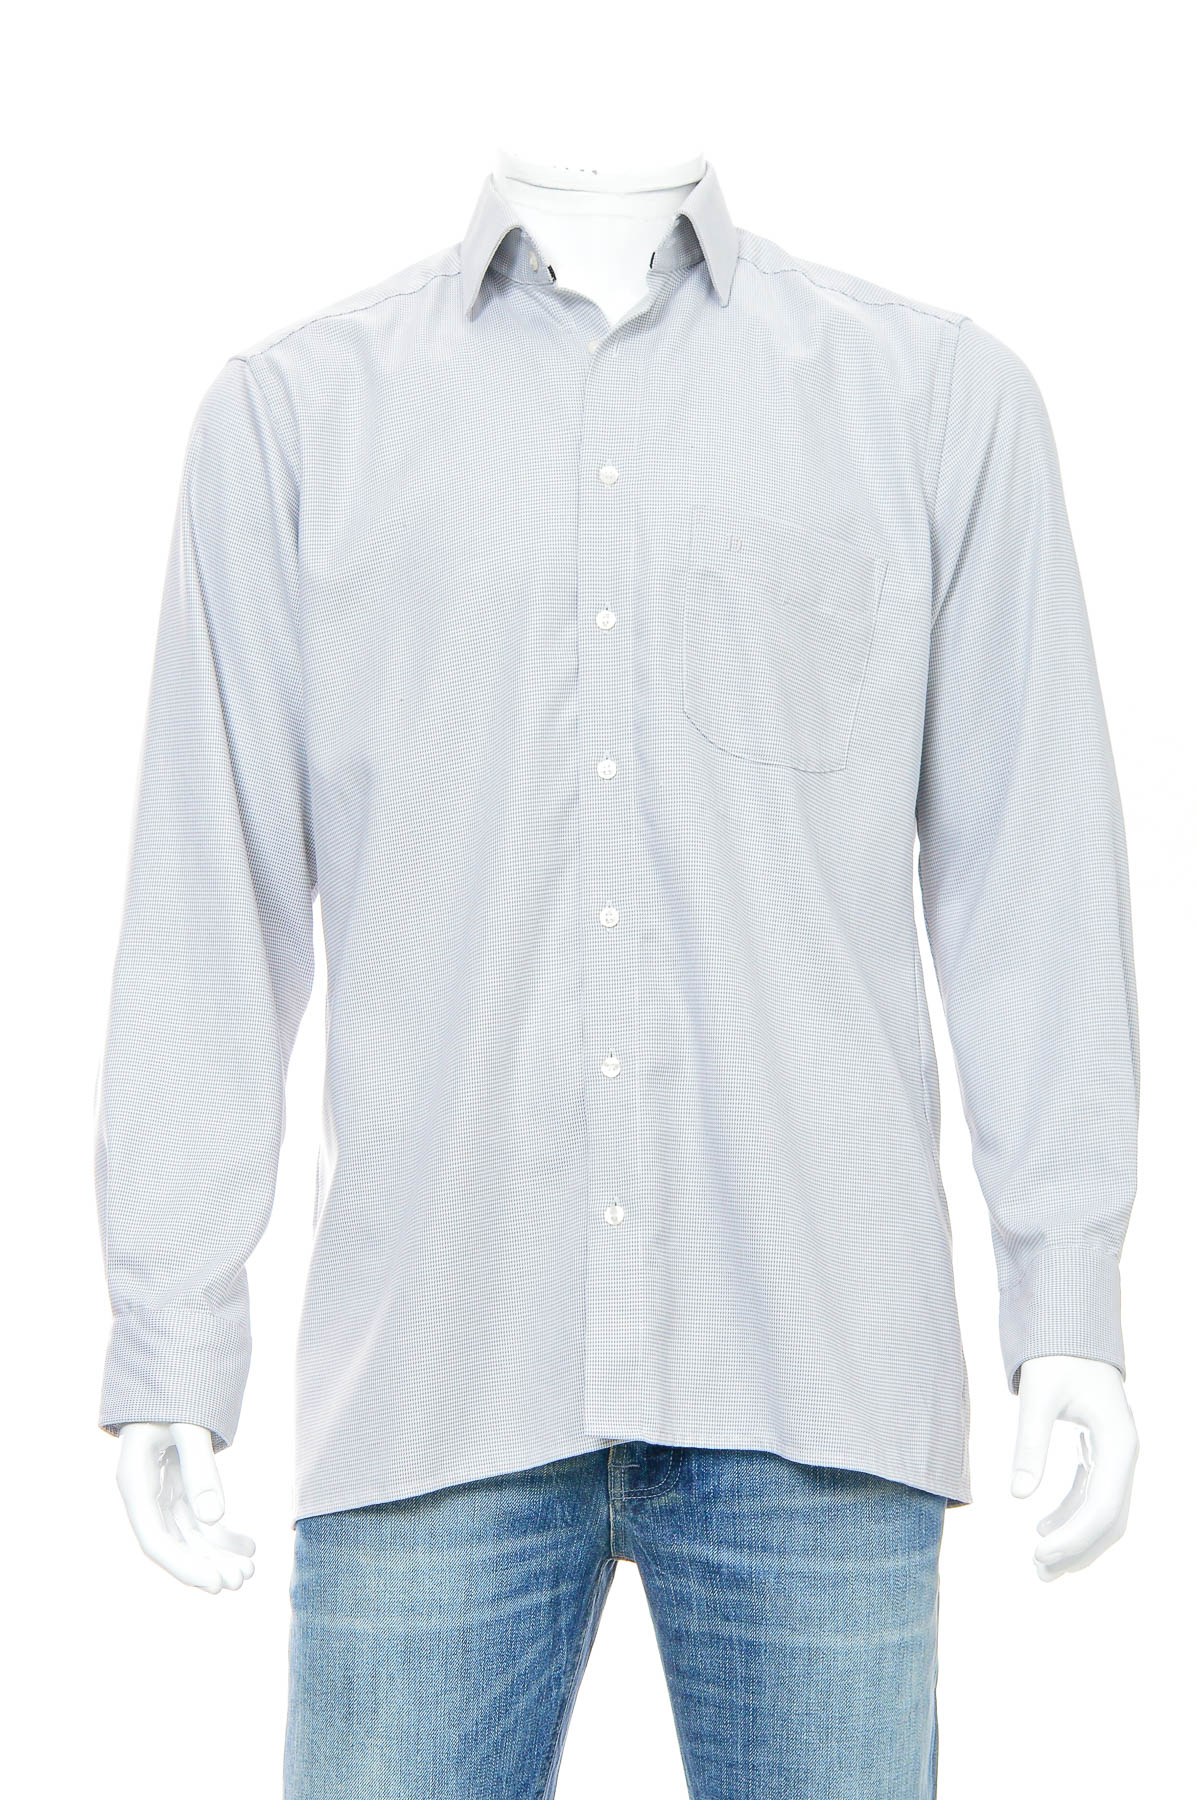 Men's shirt - Digel - 0